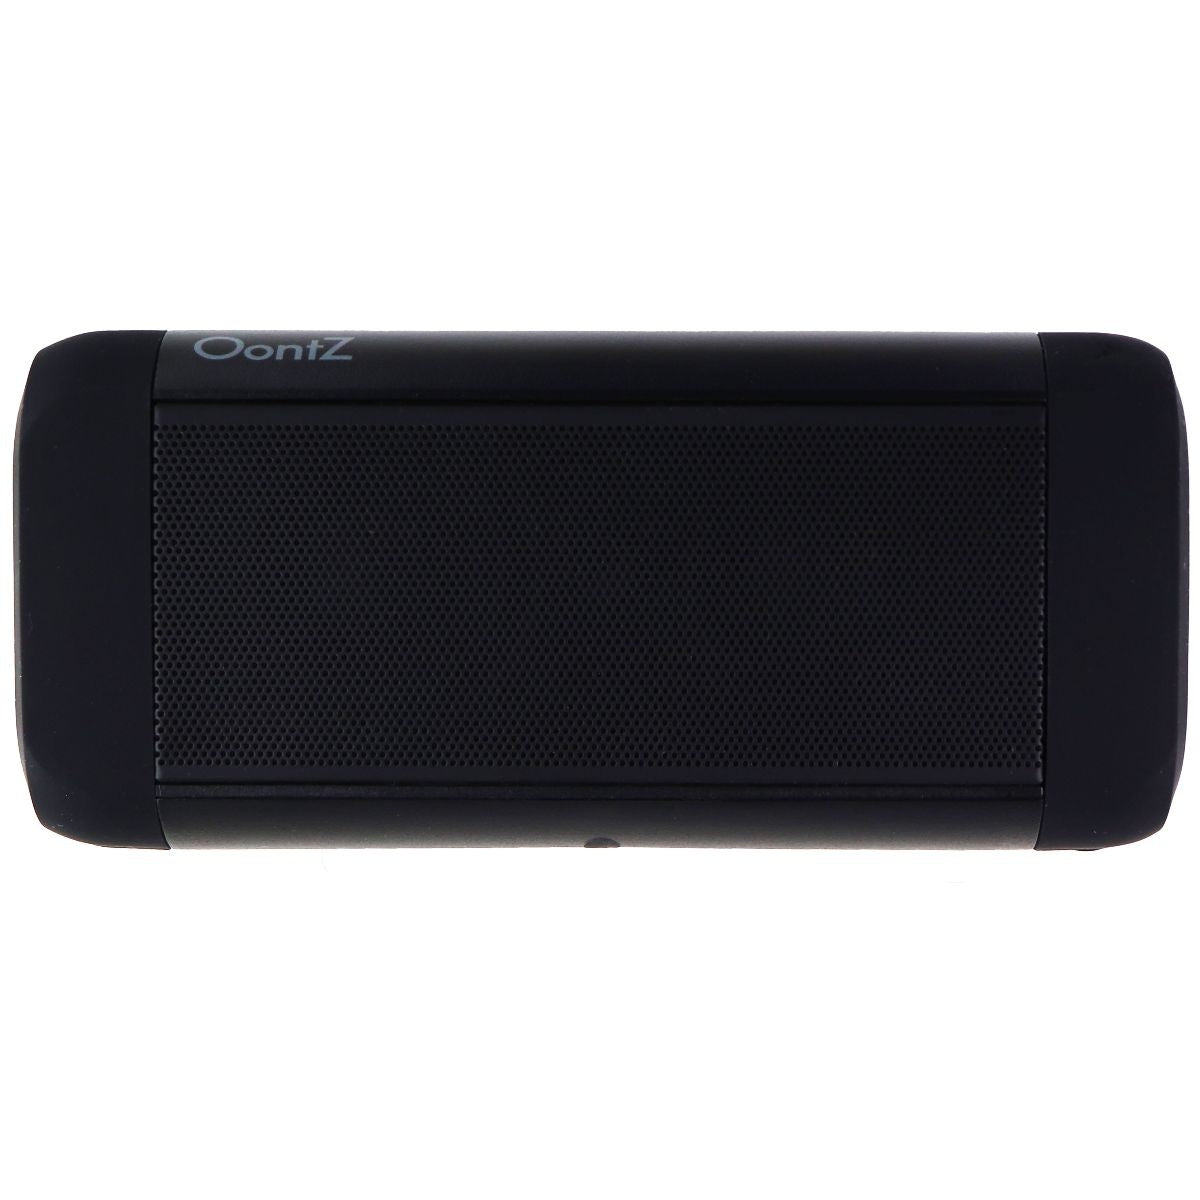 OontZ Angle 3 Ultra (3rd Gen) Portable Wireless 5.0 Bluetooth Speaker - Black Cell Phone - Audio Docks & Speakers OontZ    - Simple Cell Bulk Wholesale Pricing - USA Seller